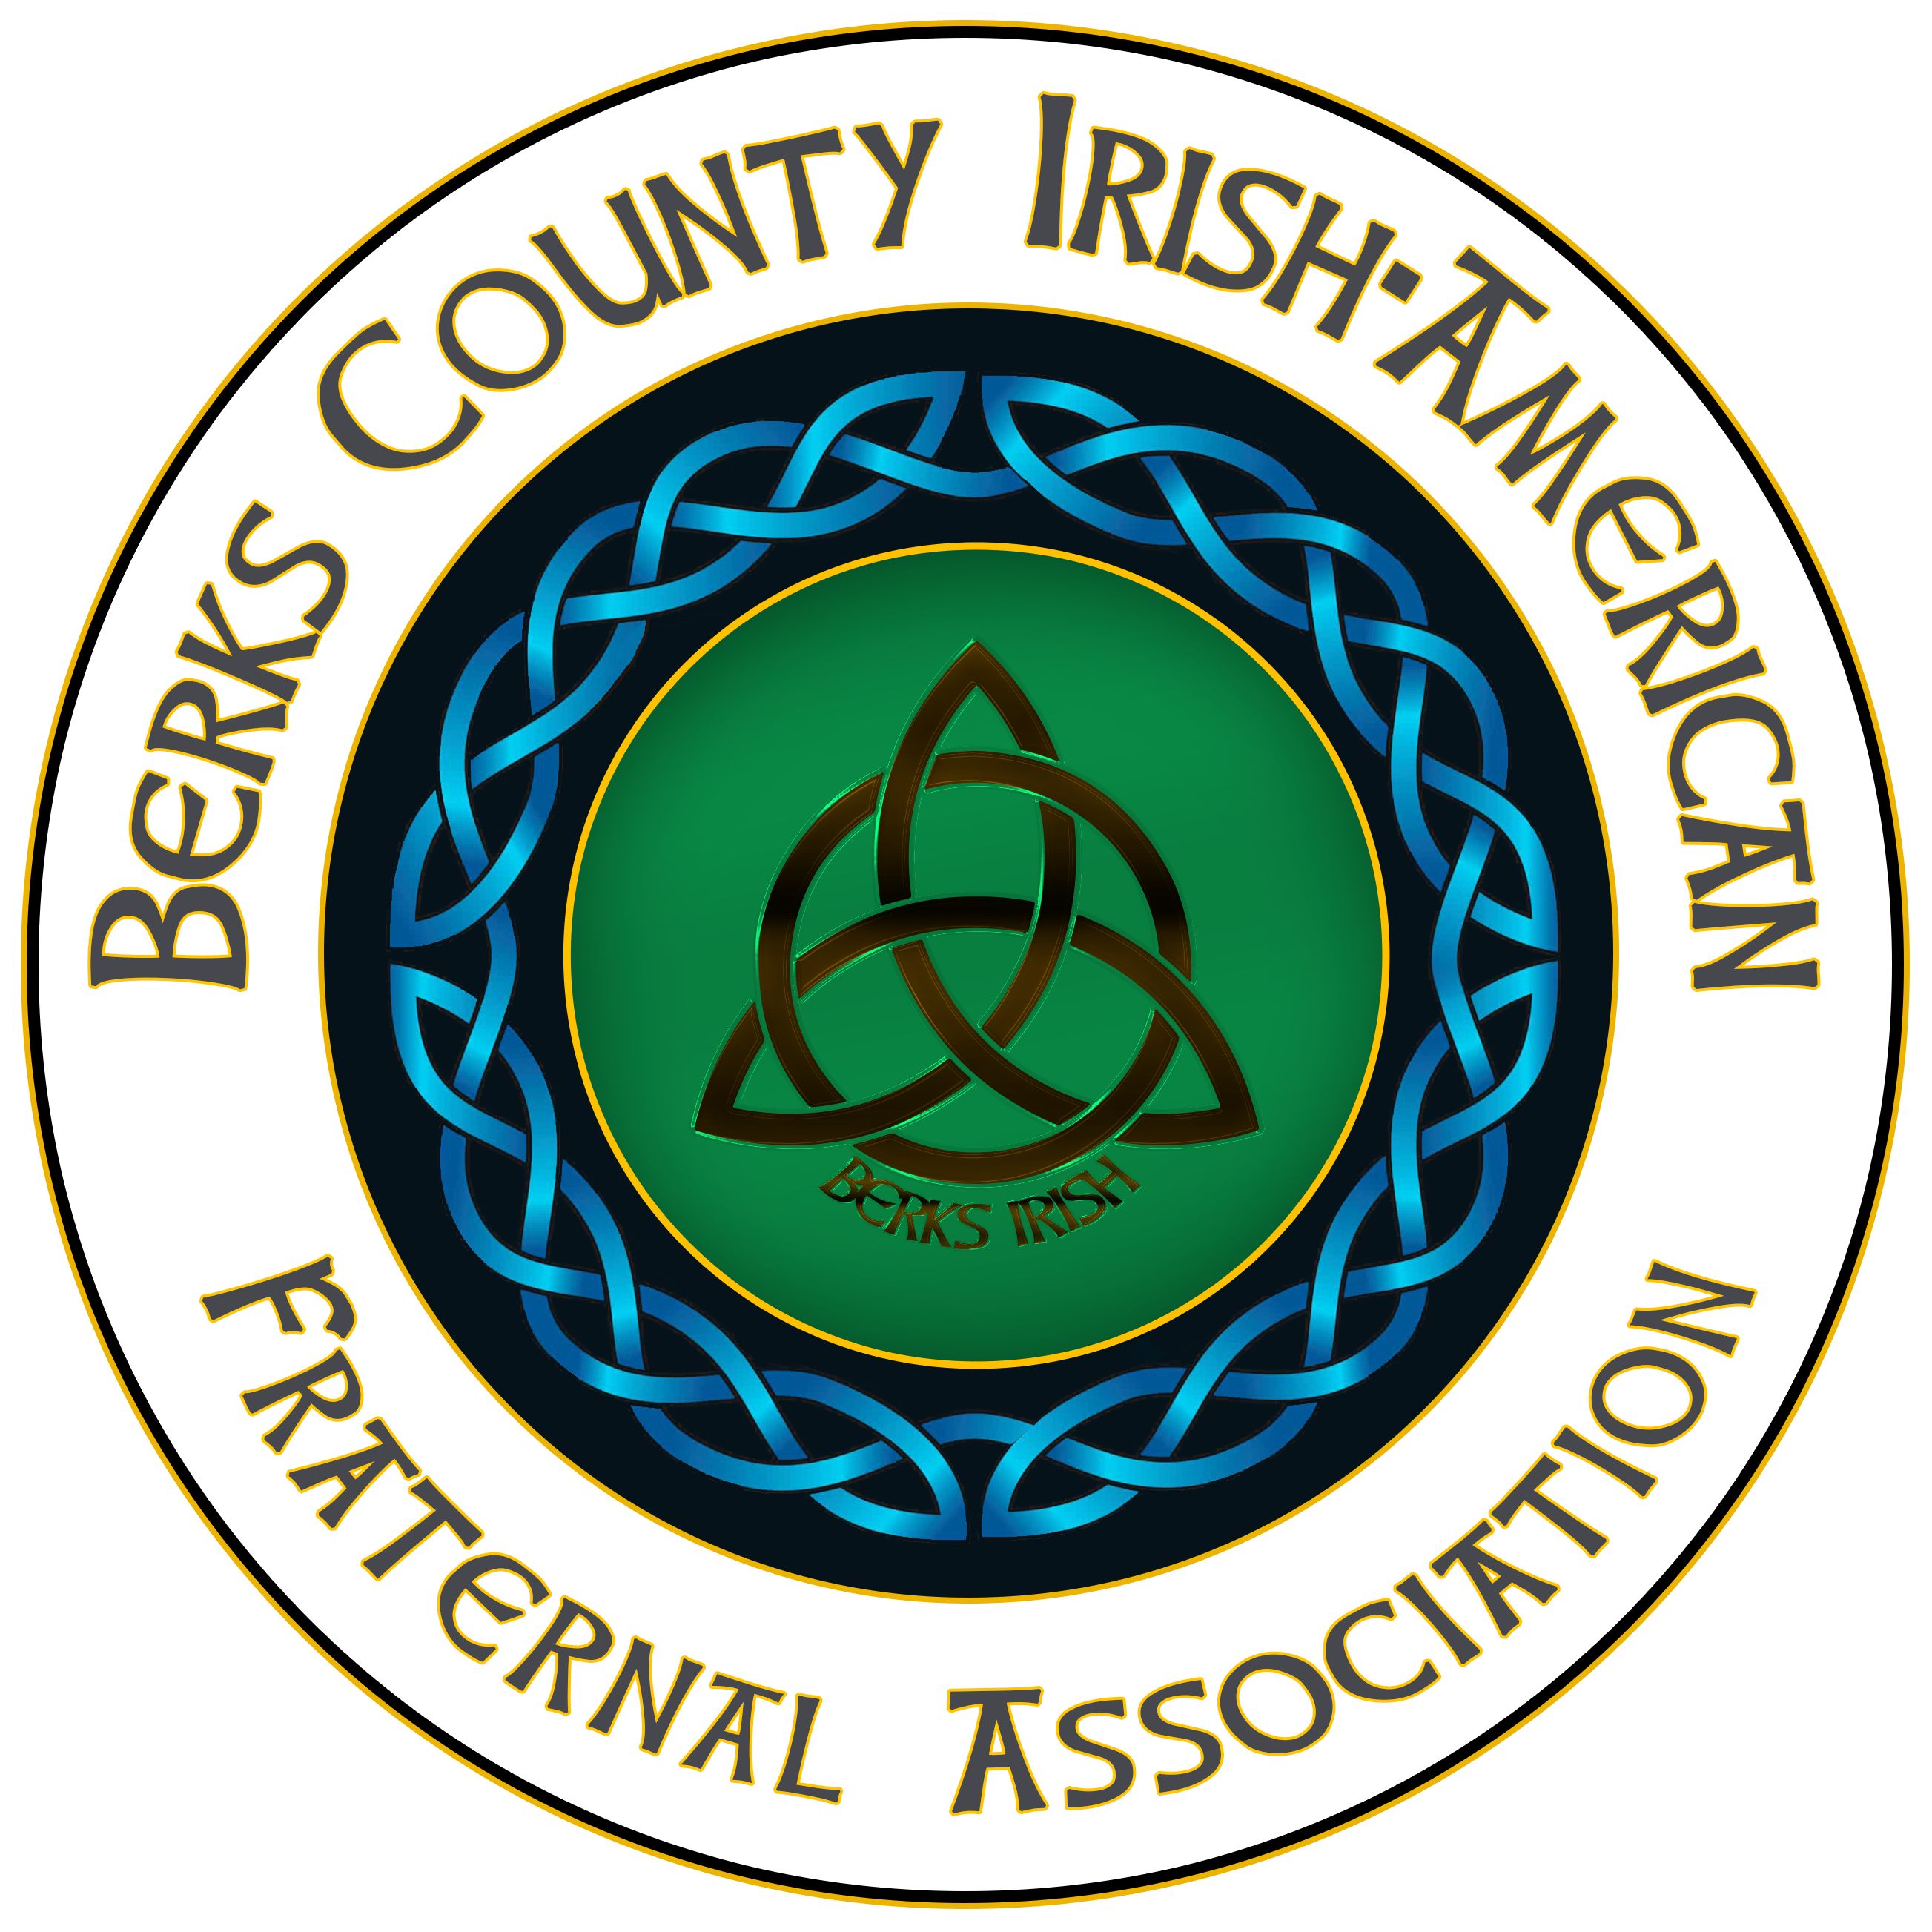 Irish Organization in Philadelphia Pennsylvania - Berks County Irish-American Fraternal Association